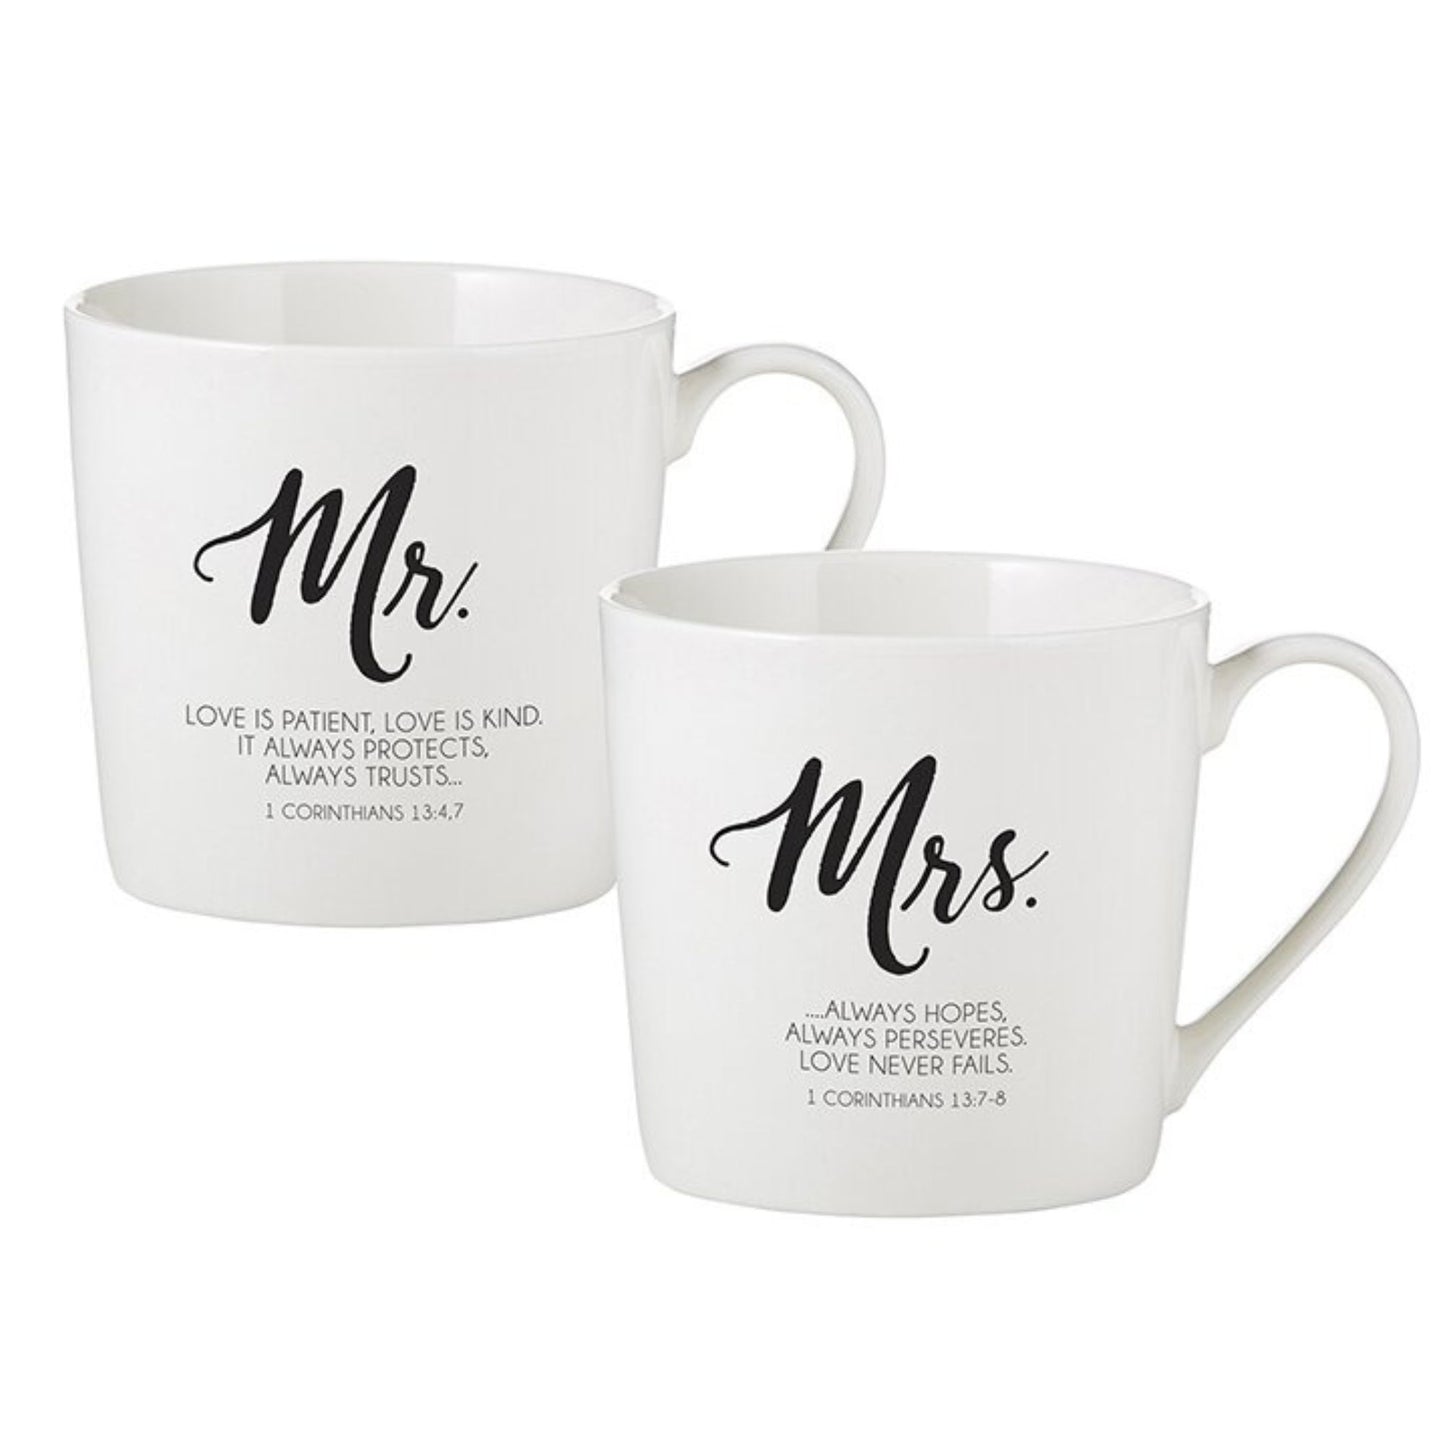 Mr & Mrs Cafe Coffee Mug Set - Love is Patient... Love Never Fails - 1 Corinthians - Inspirational Mugs | Wedding gift, Anniversary gift, Couples gift | oak7west.com